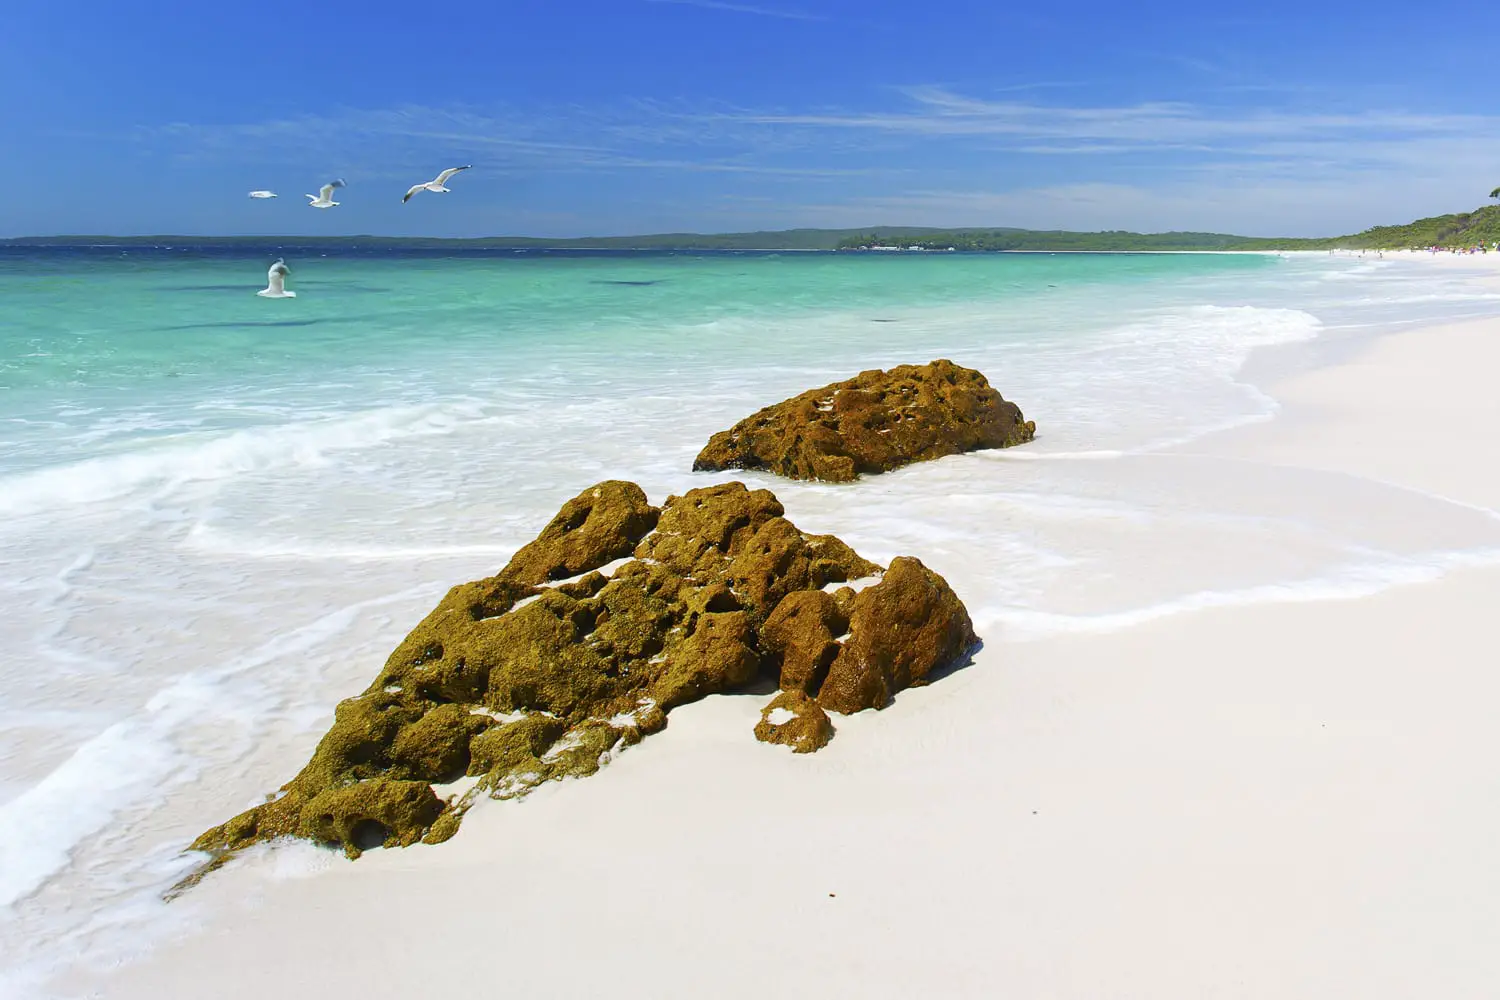 The white sands of Hyams Beach, Australia.